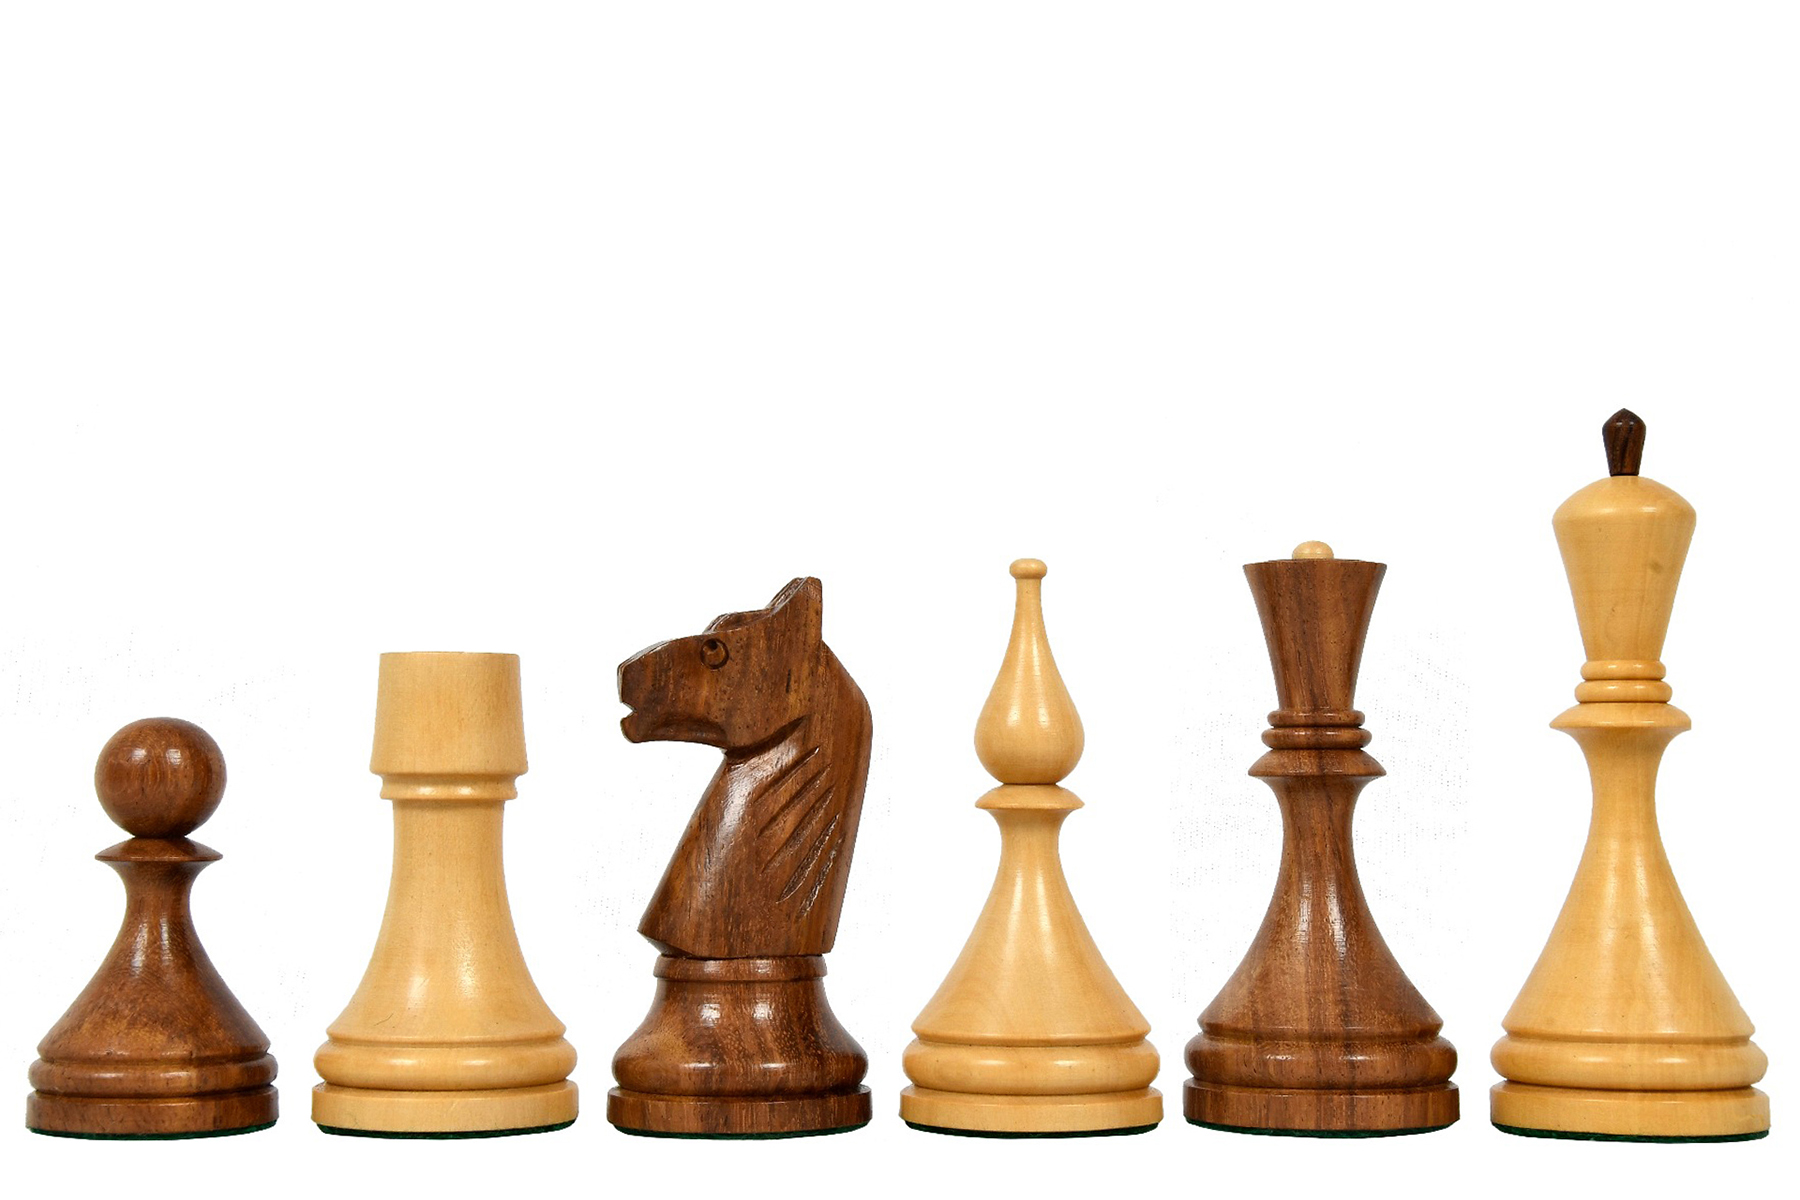 Reproduced 1961 Soviet Championship Baku Chess Set in Ebonized Boxwood 4” King 